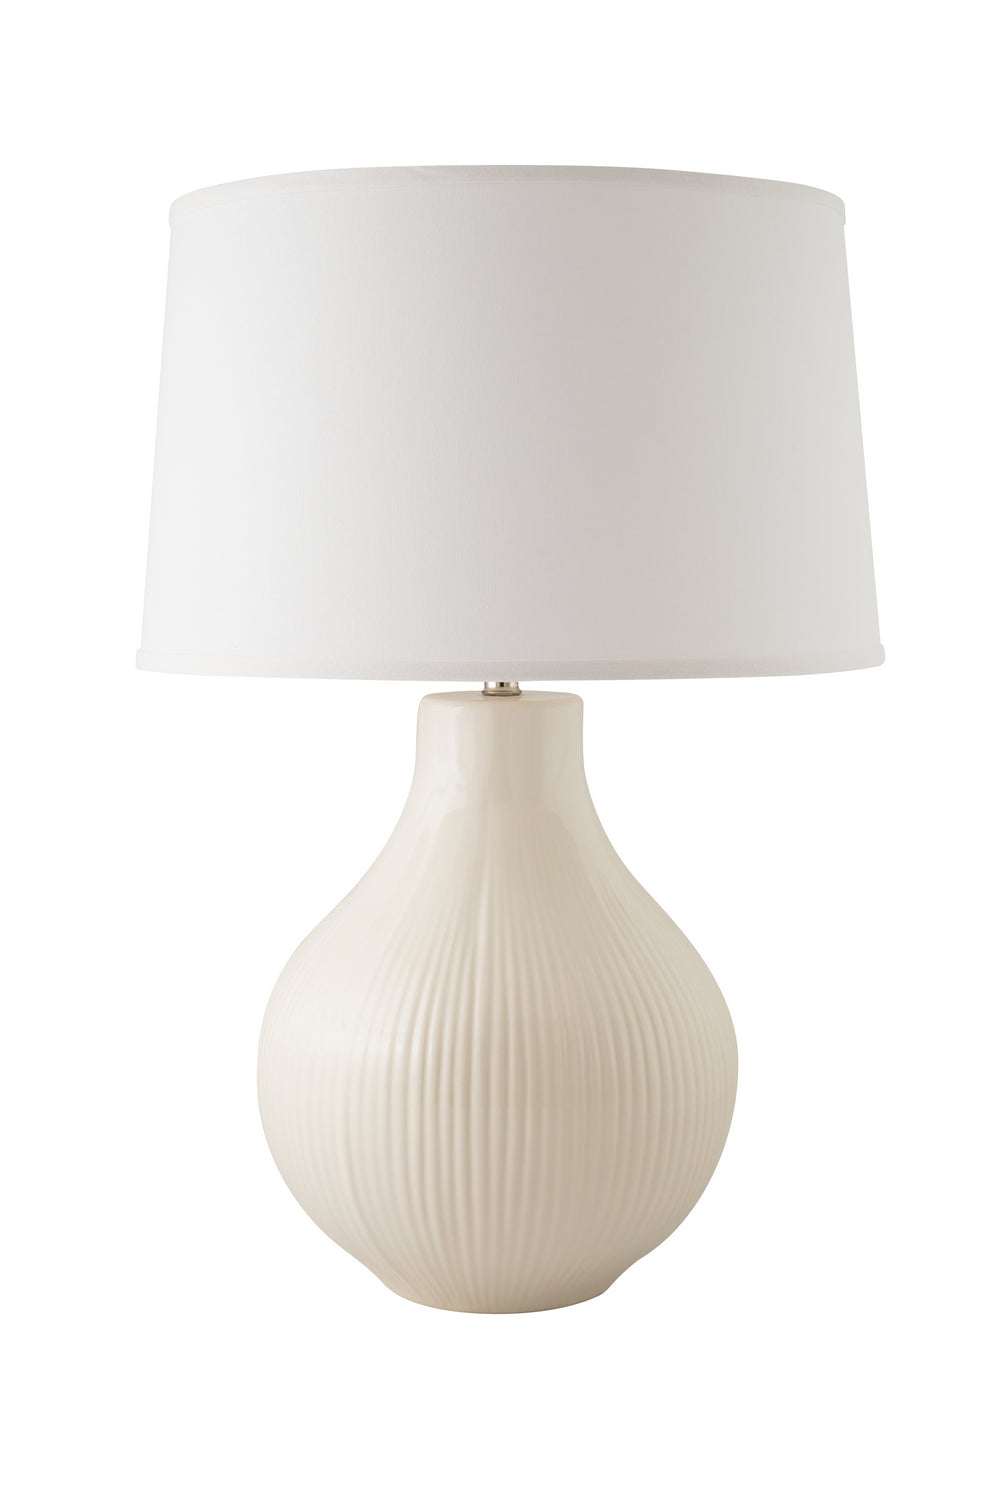 River Ceramic Lighting 270-01 Classic Fluted One Light Table Lamp Lamp White